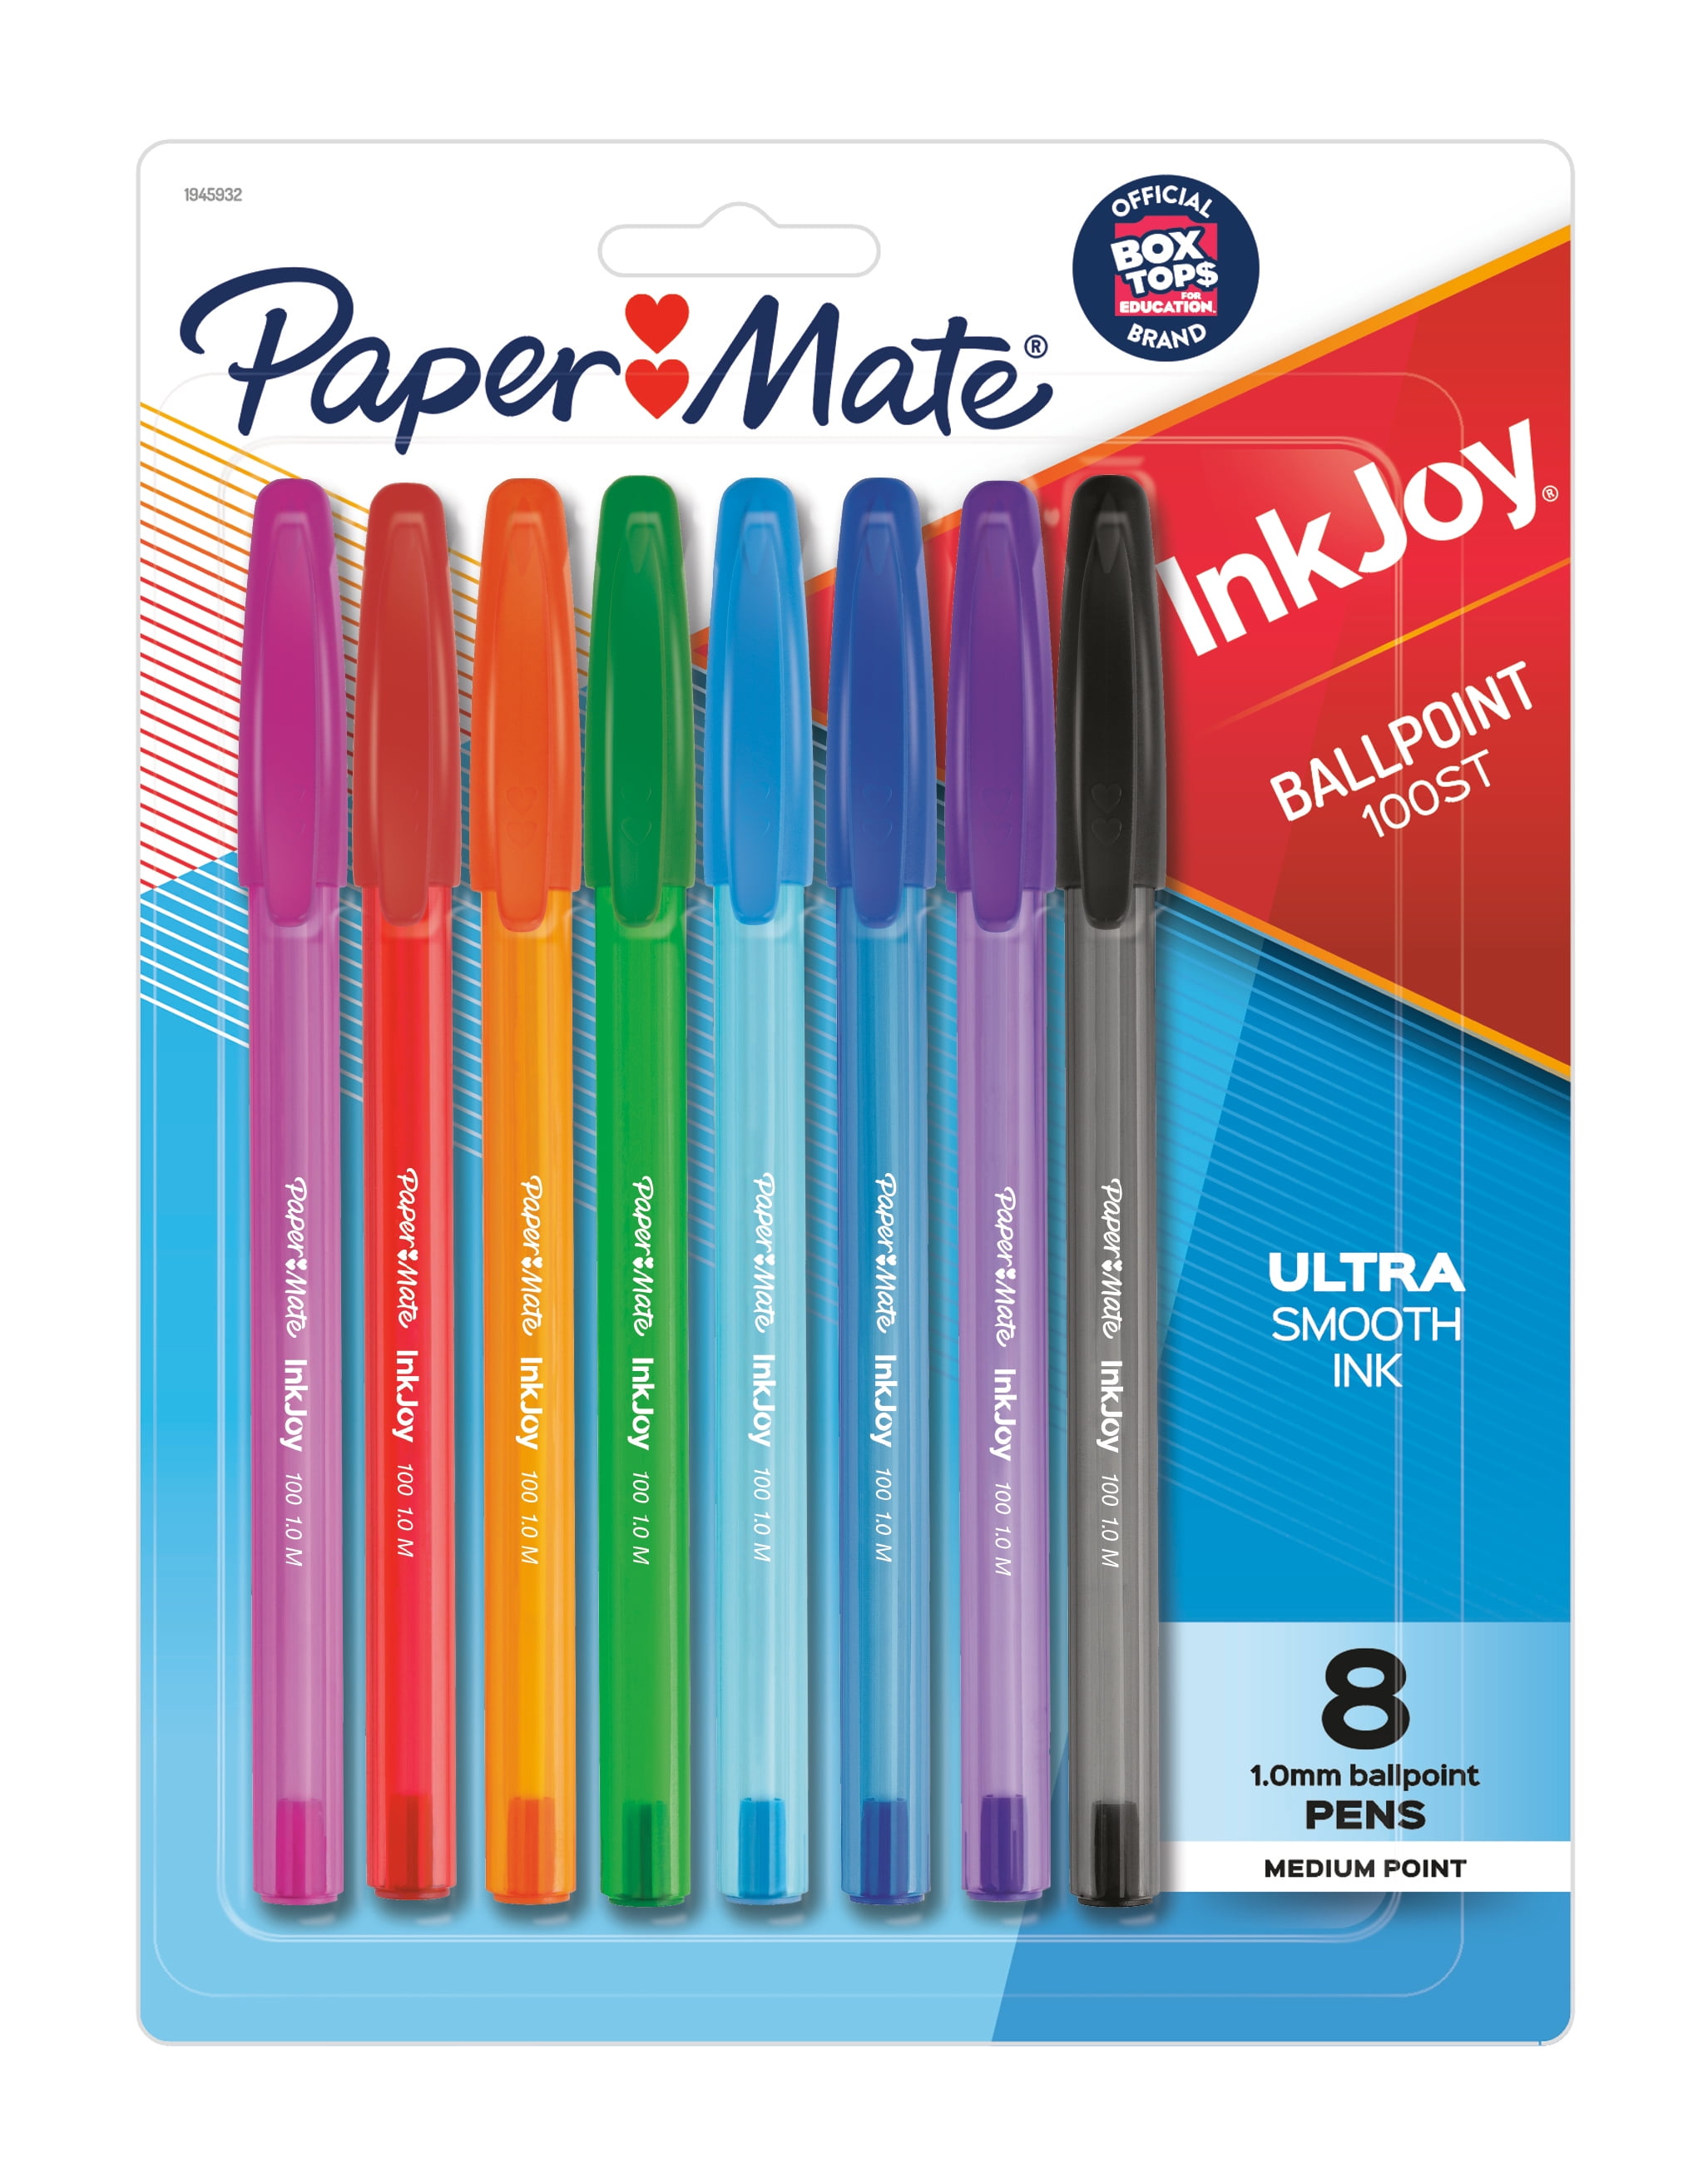 Paper Mate Eraser Mate Ballpoint Pen Black Ink Pack of 8